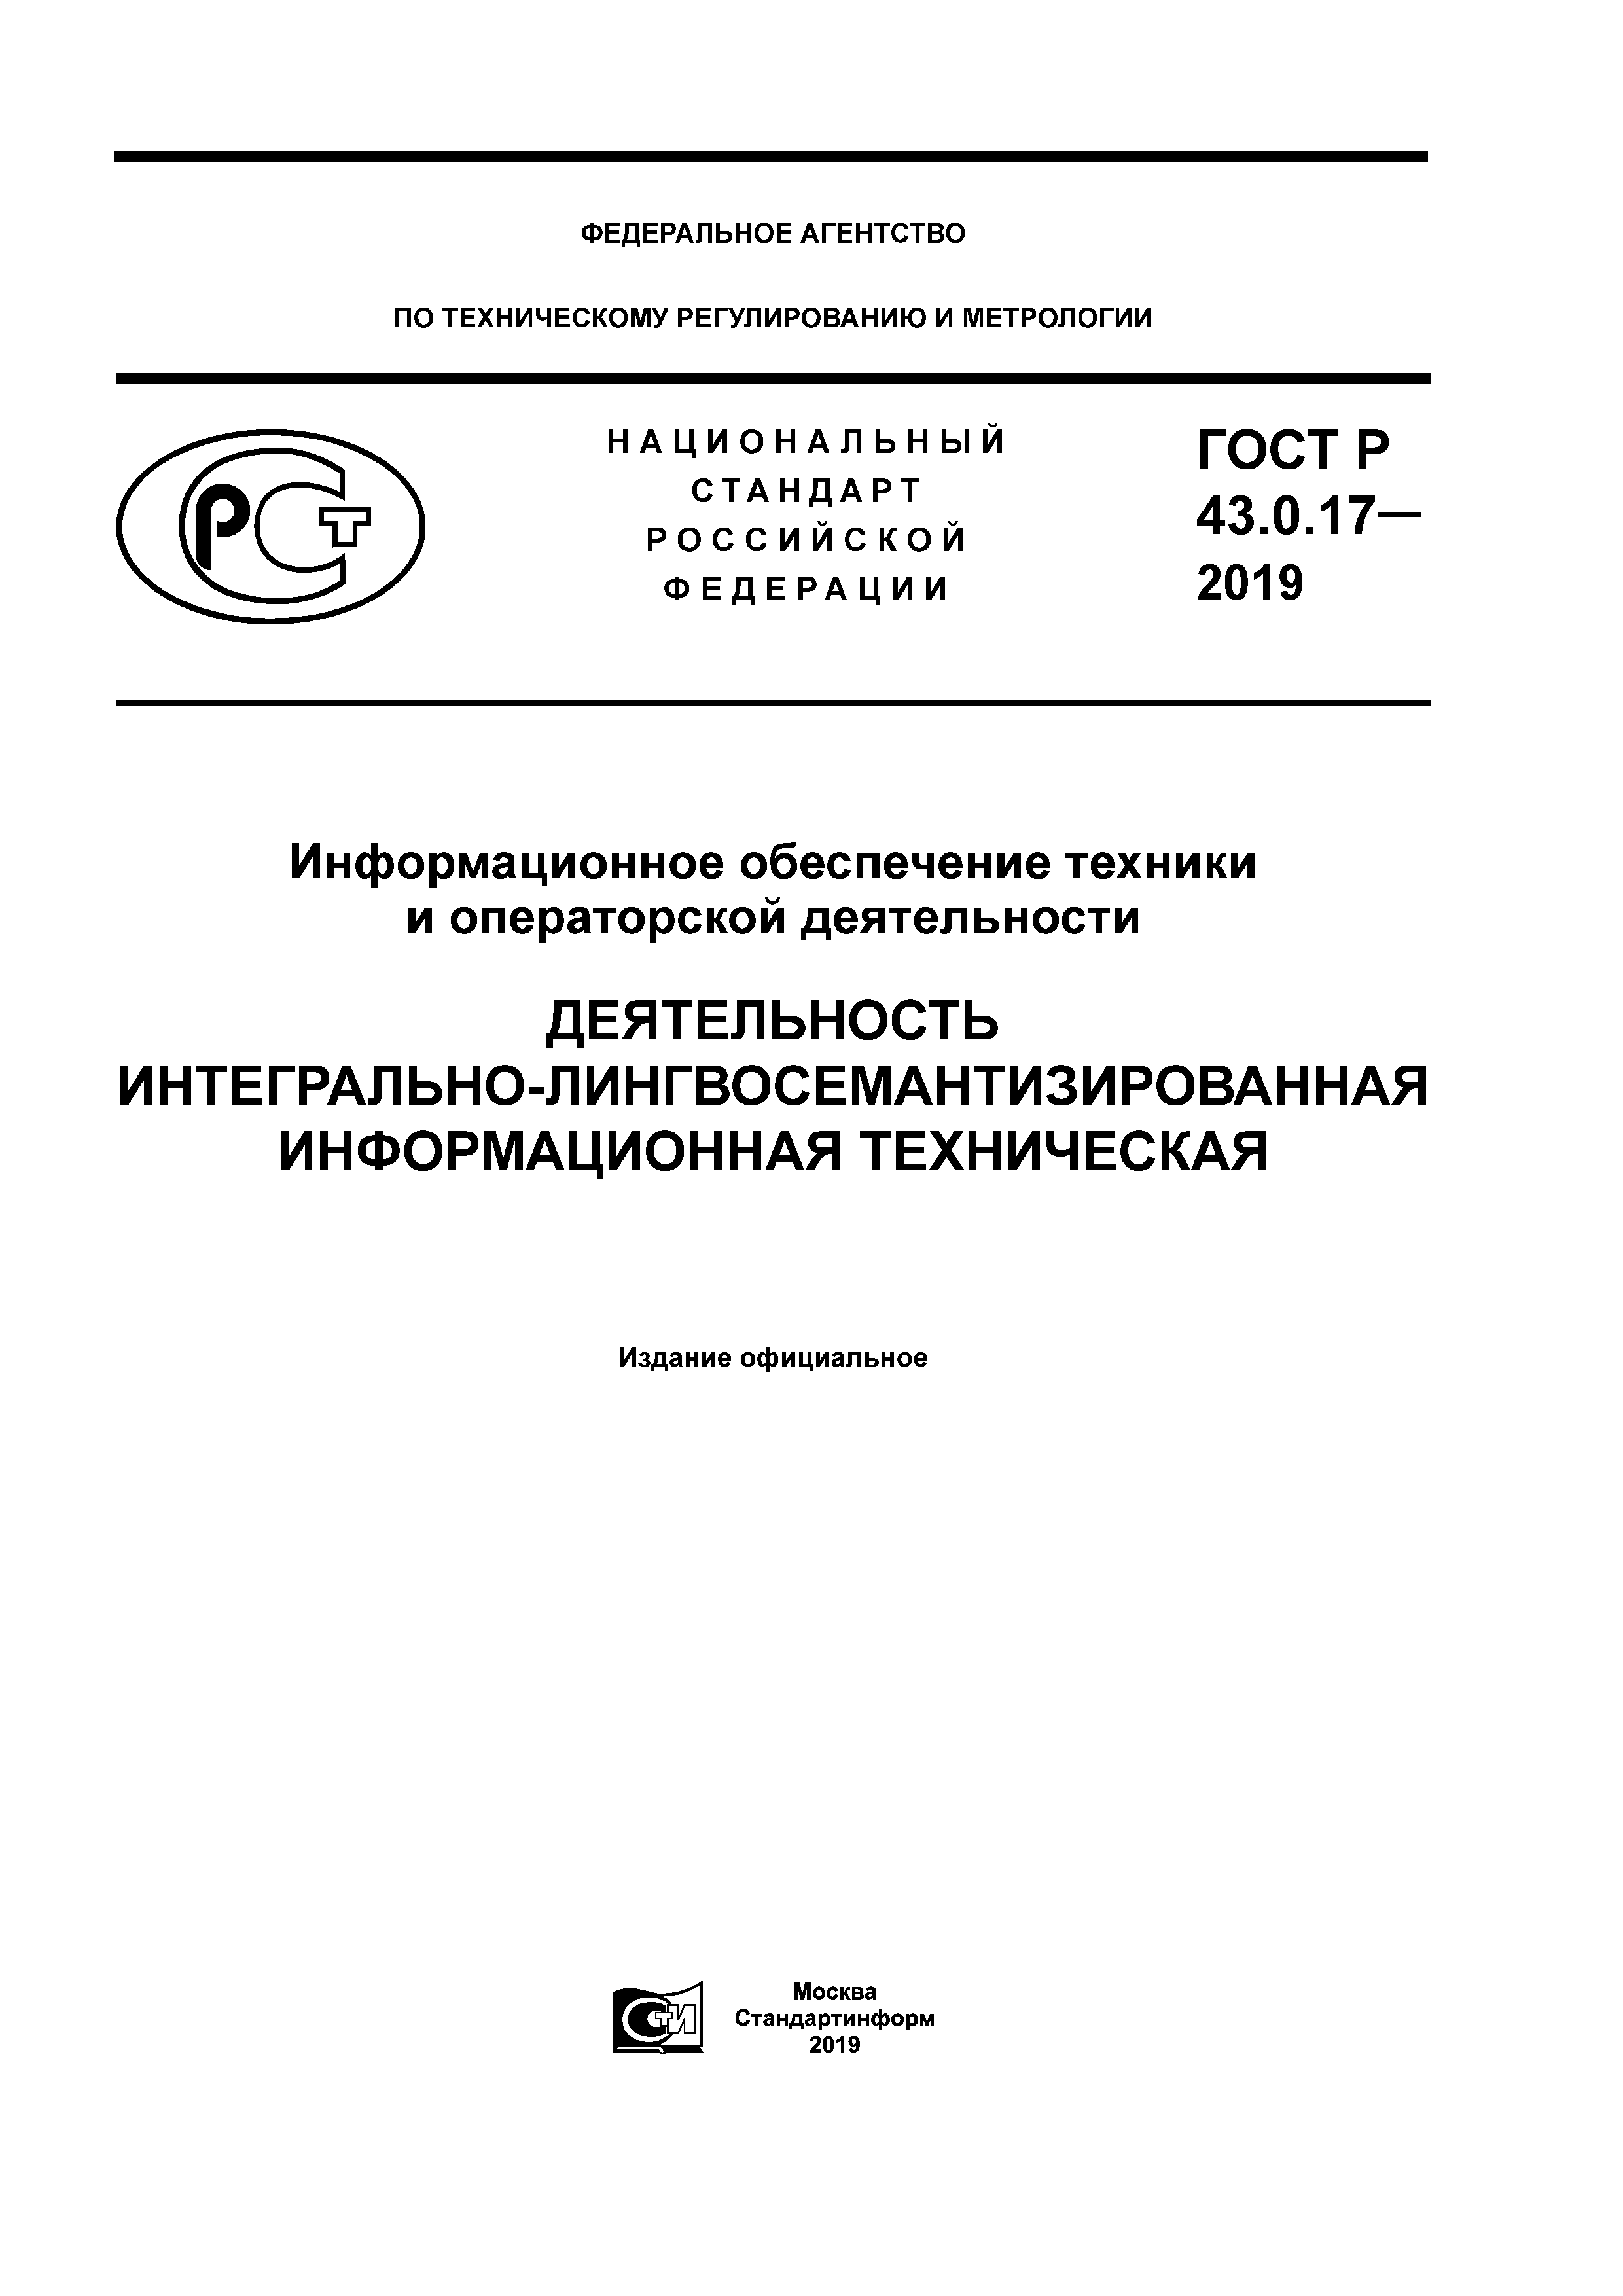 ГОСТ Р 43.0.17-2019